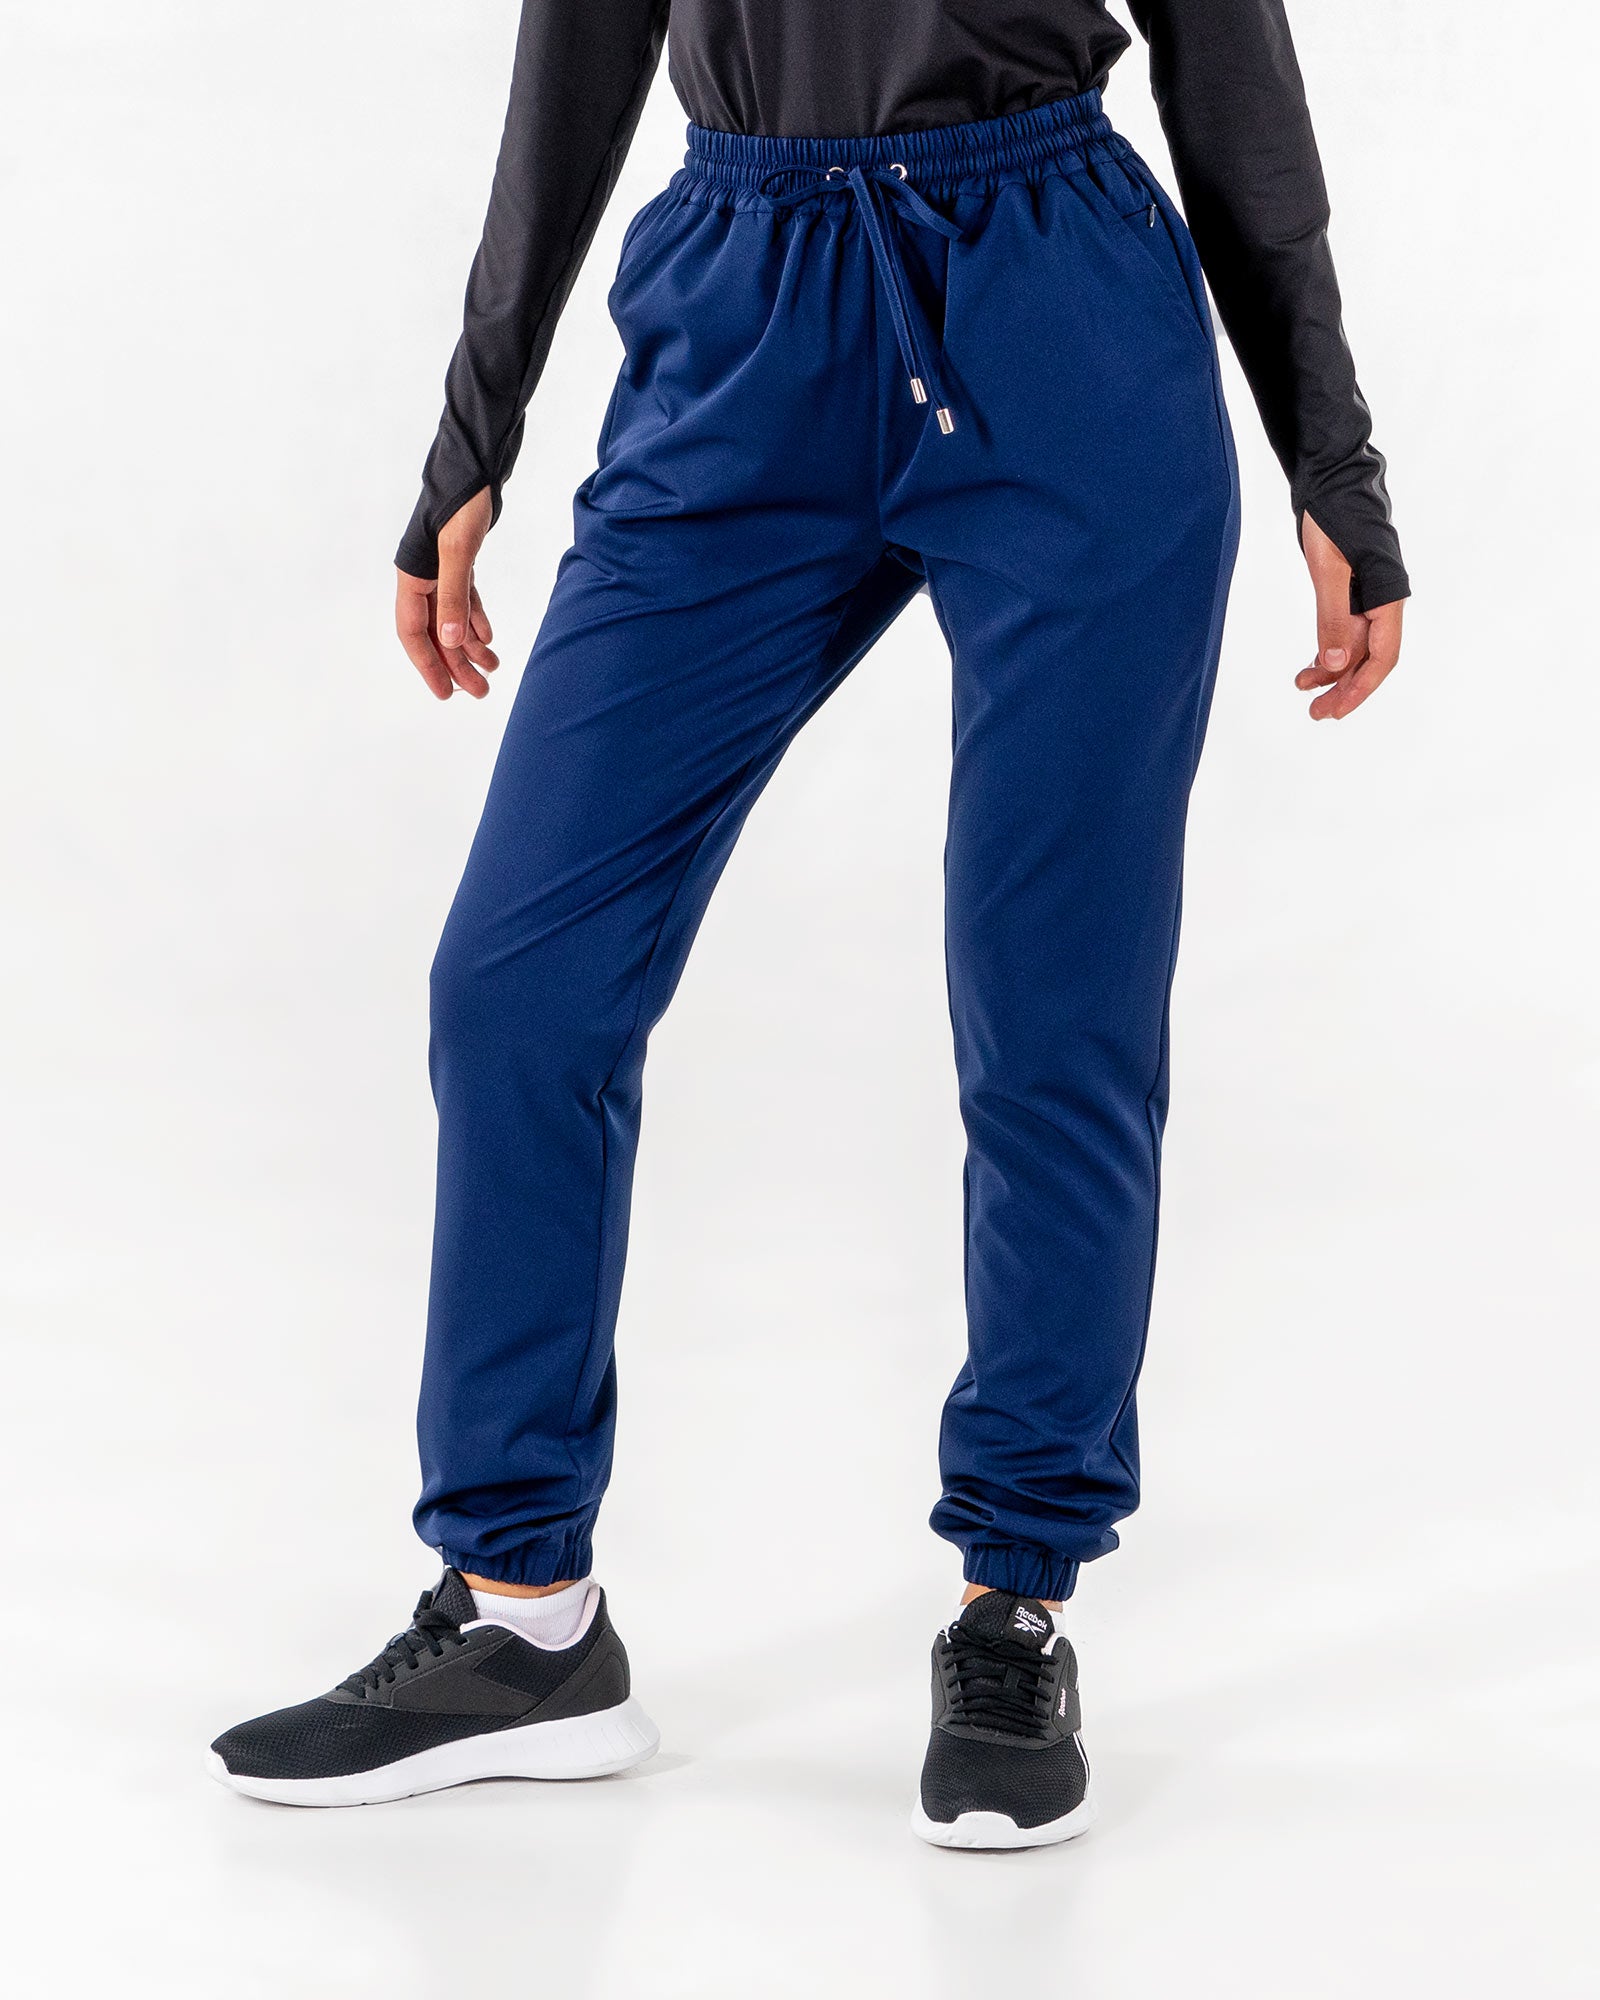 Veil Glider Drawstring Jogger - Modest Activewear Pants